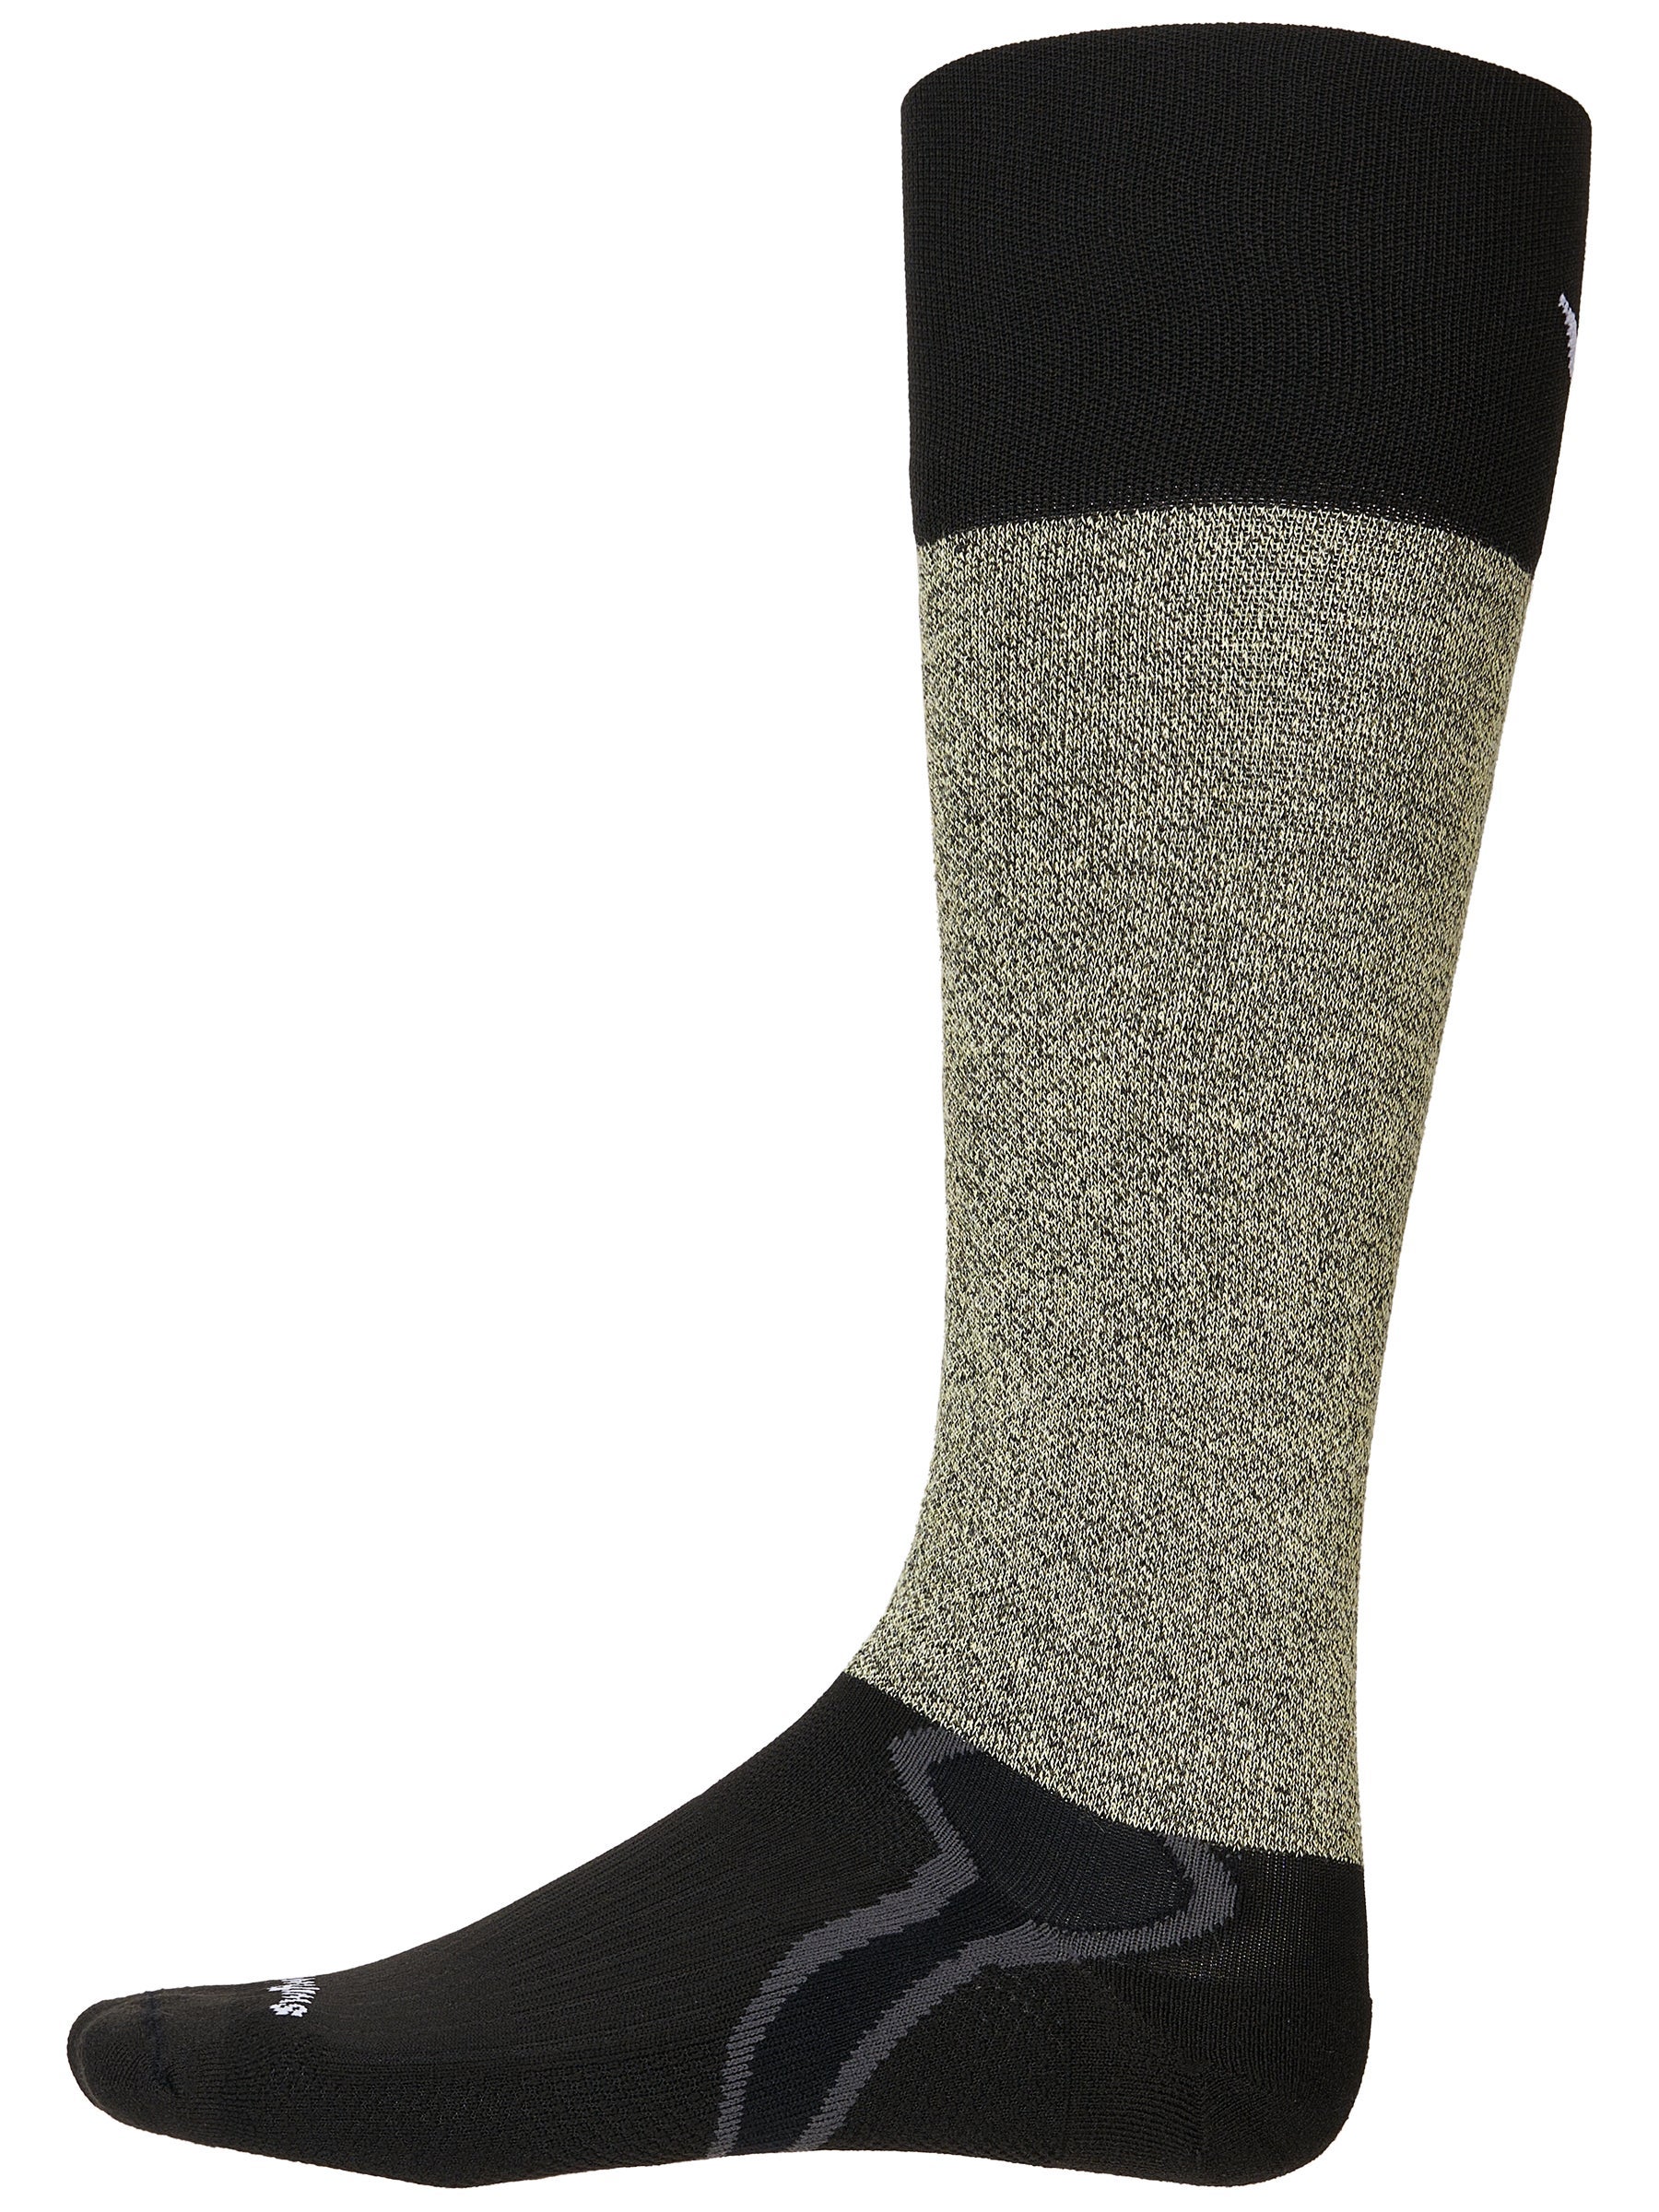 Swiftwick Hockey Cut-Resistant Hockey Skate Socks Sr S M L *NEW* 